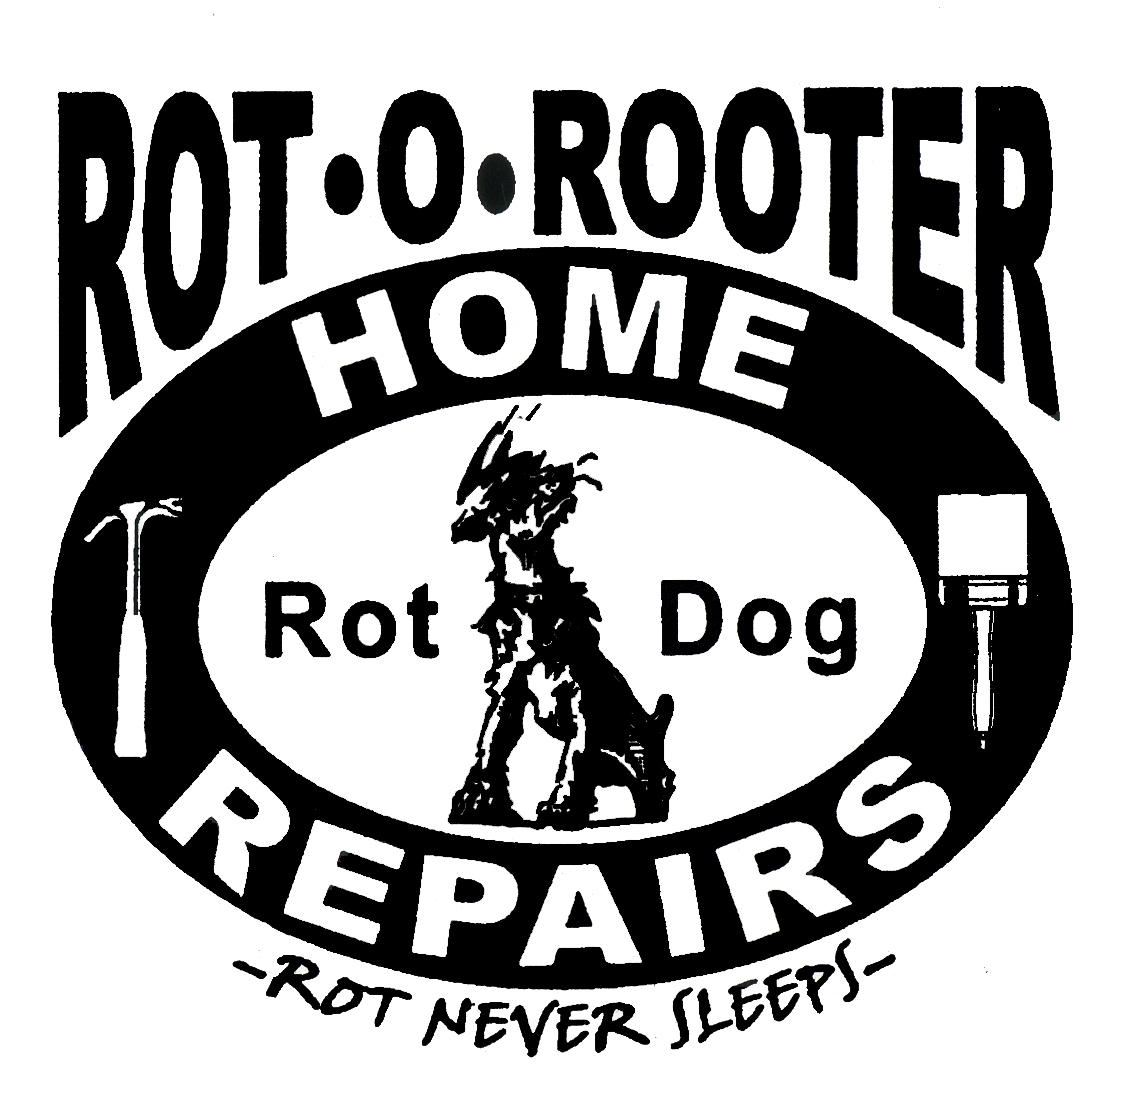 Rot-O-Rotor Home
                  Repairs